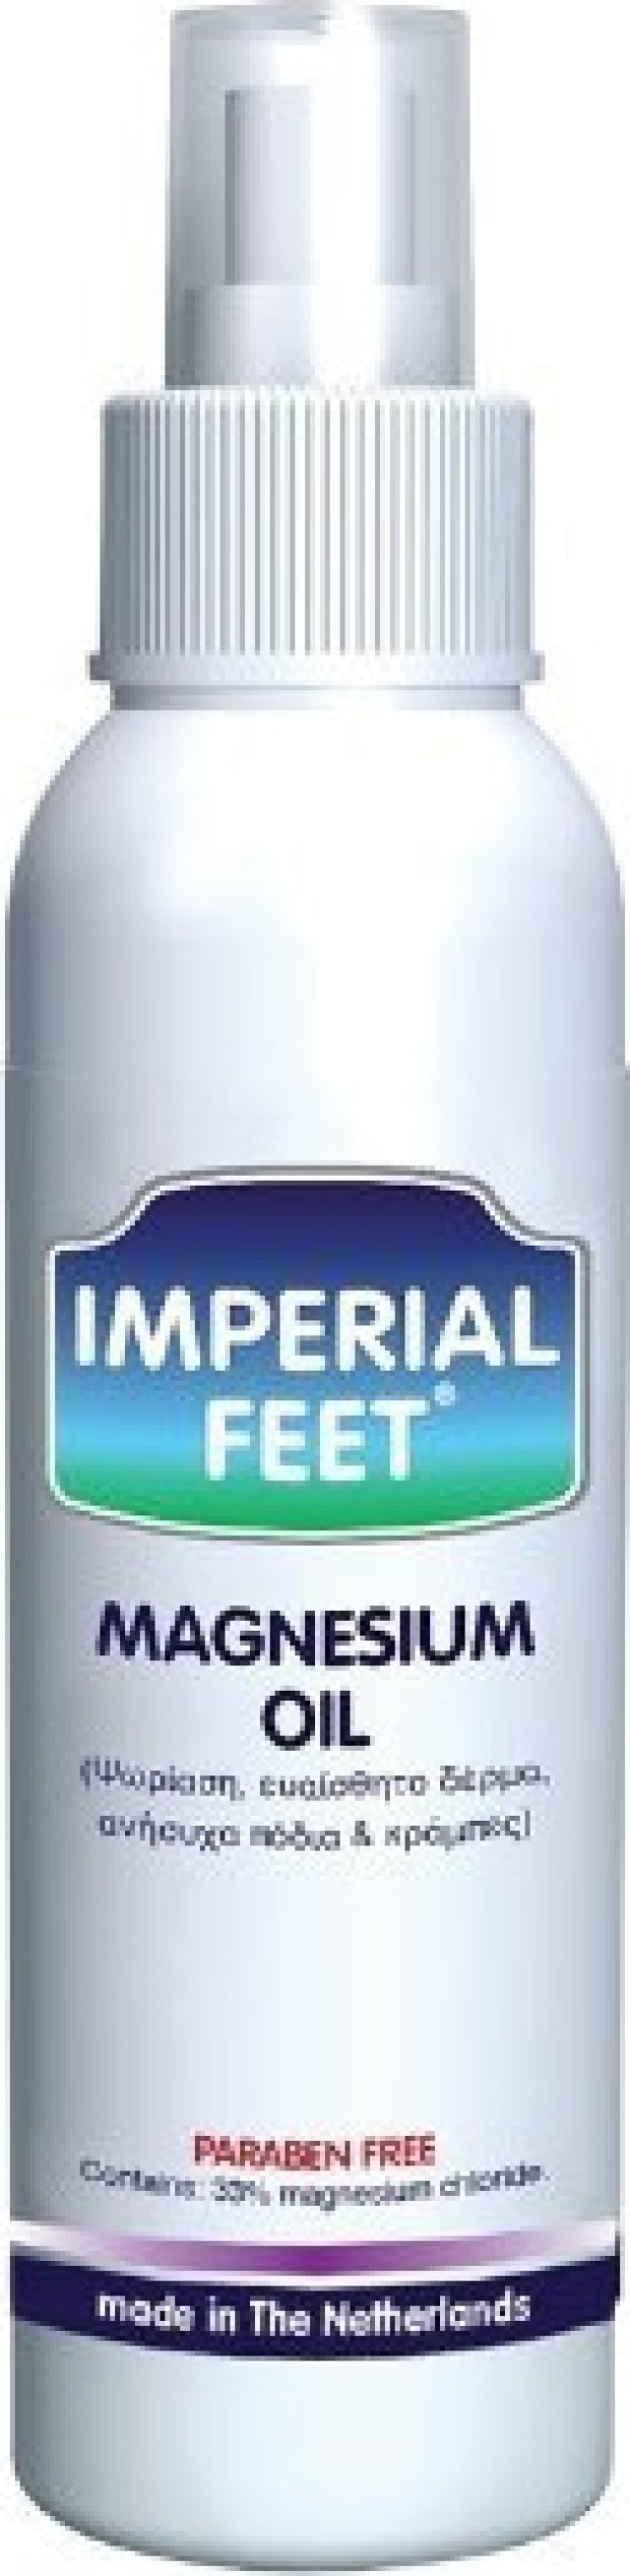 Imperial Feet Magnesium Oil Λάδι για Ψωρίαση, Ευαίσθητο Δέρμα, Ανήσυχα Πόδια και Κράμπες 150ml